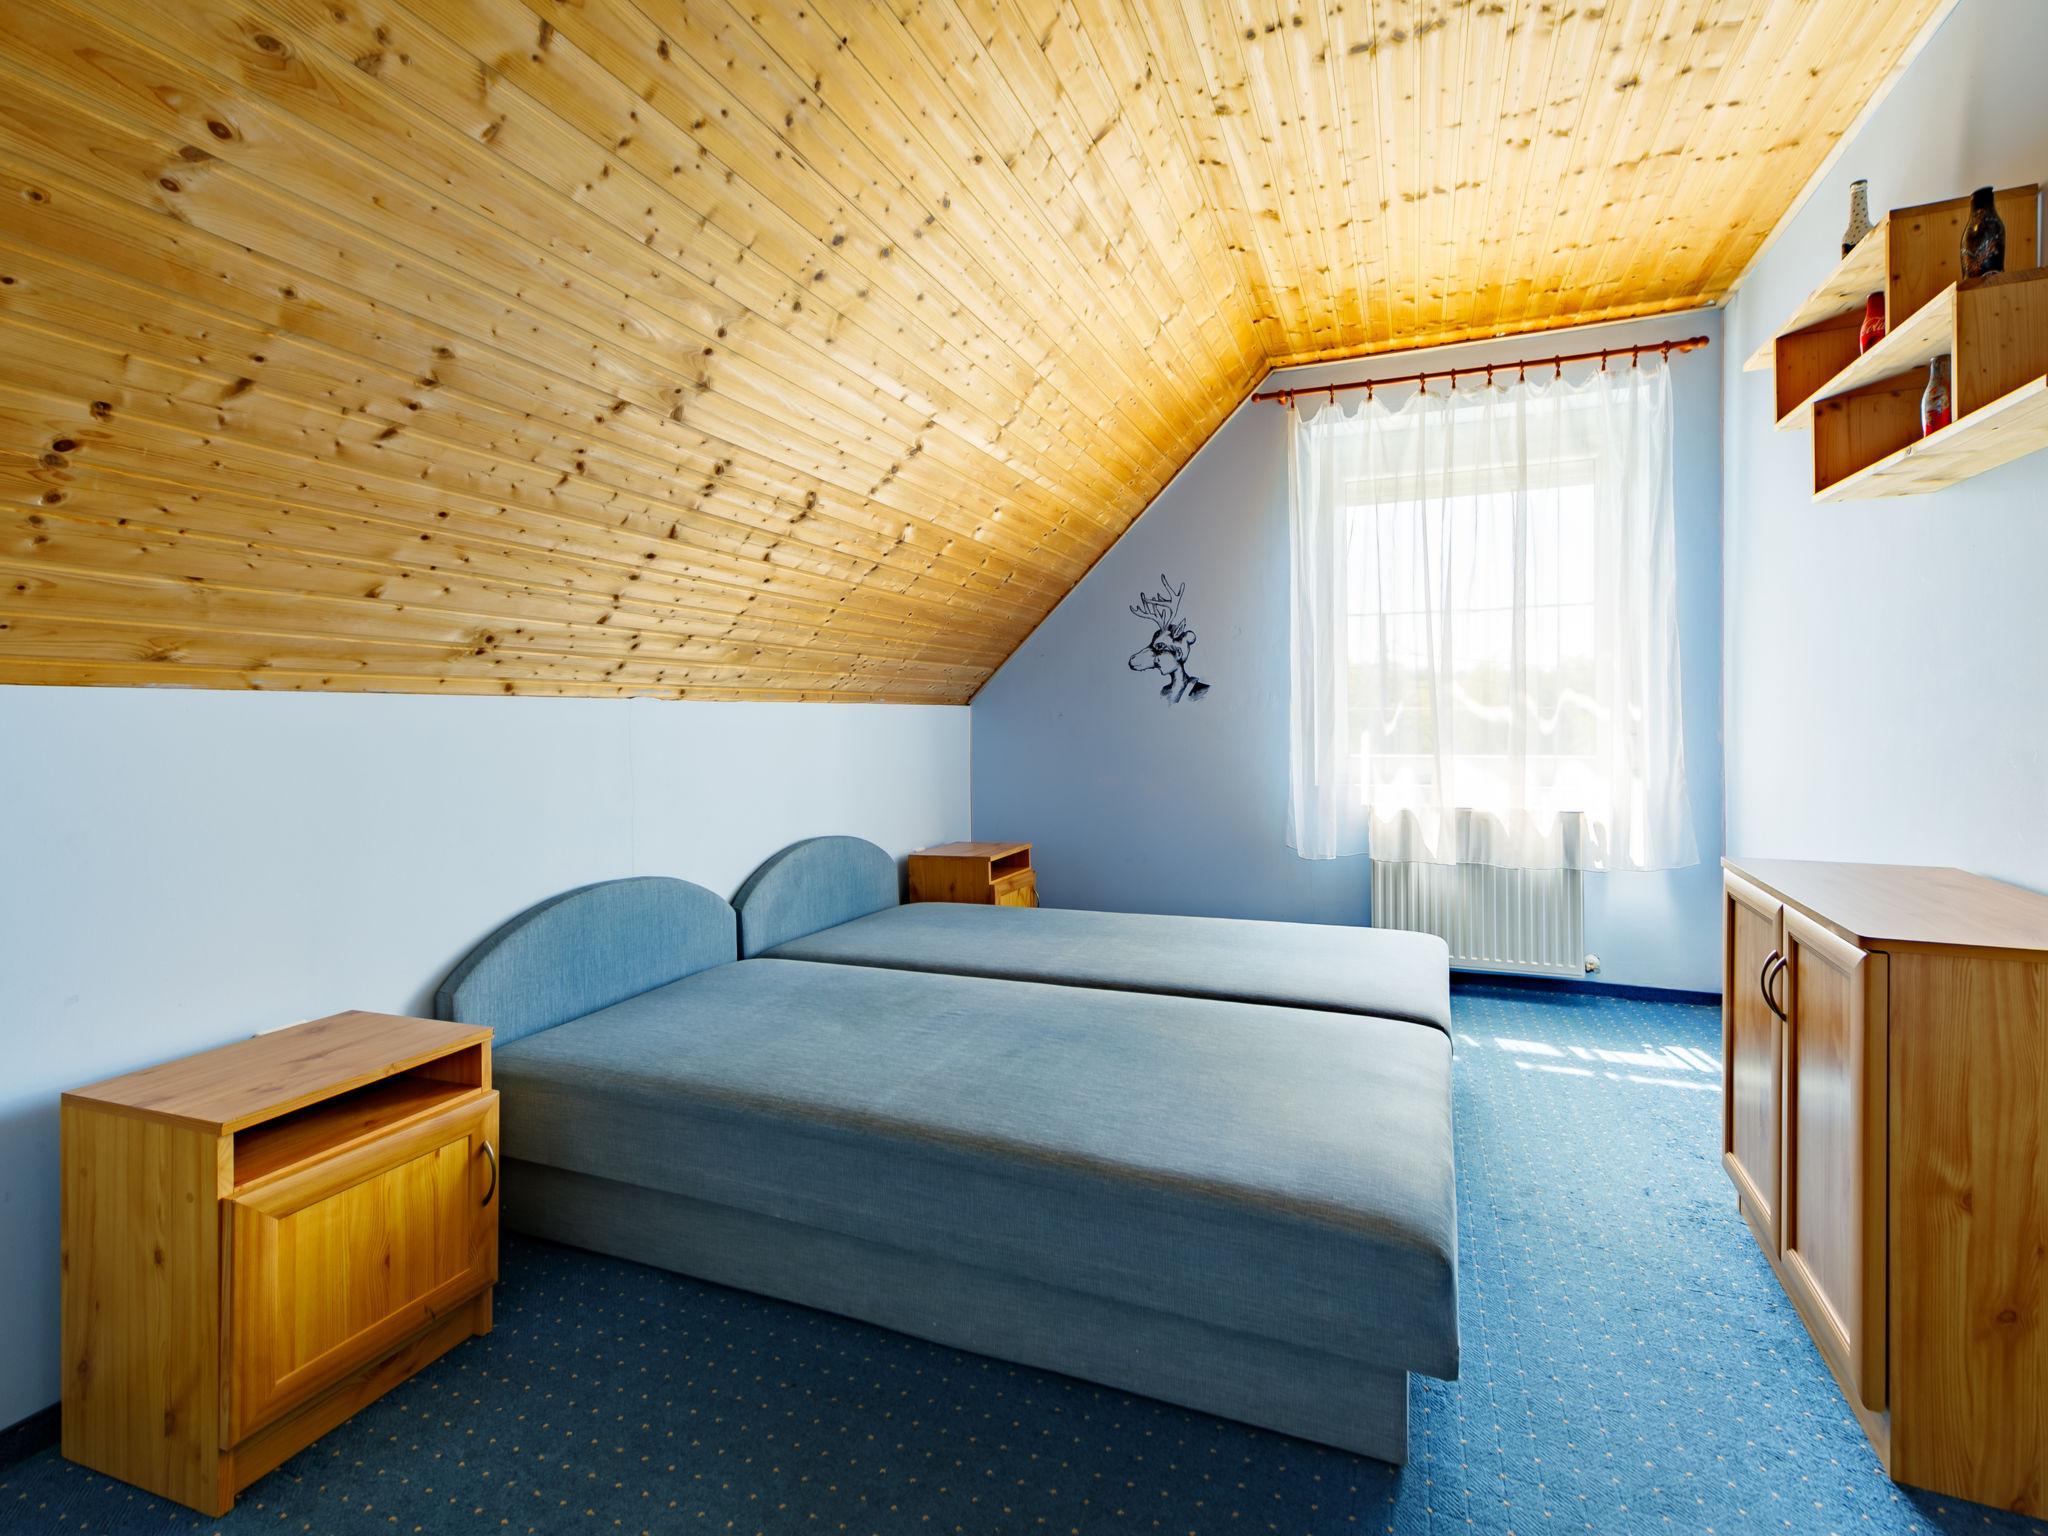 Foto 23 - Casa con 5 camere da letto a Balatonőszöd con giardino e vista sulle montagne